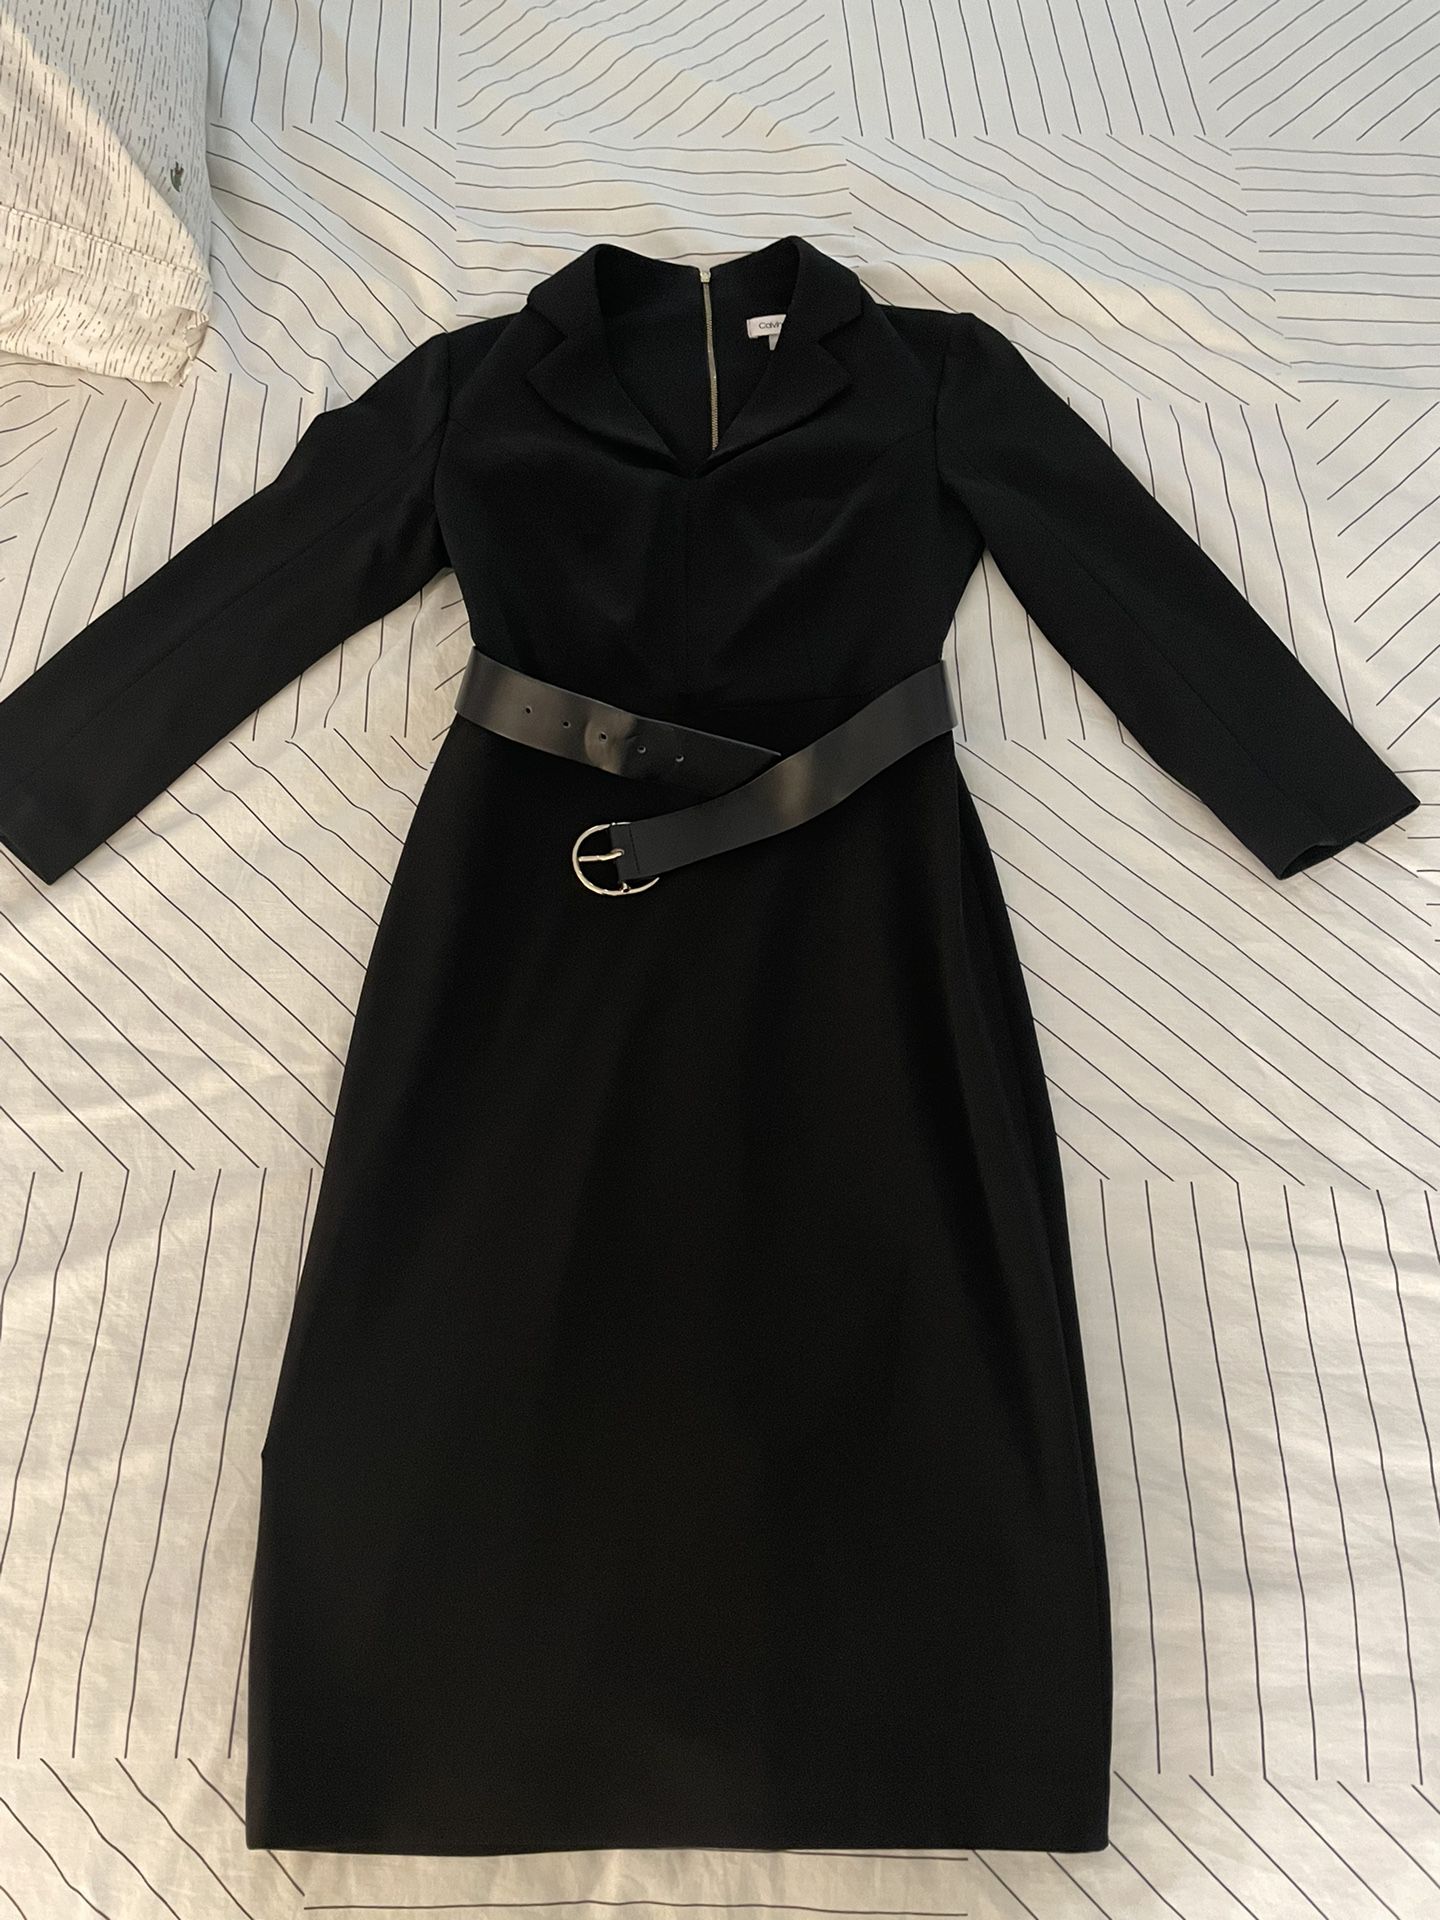 Calvin Klein Dress - Black